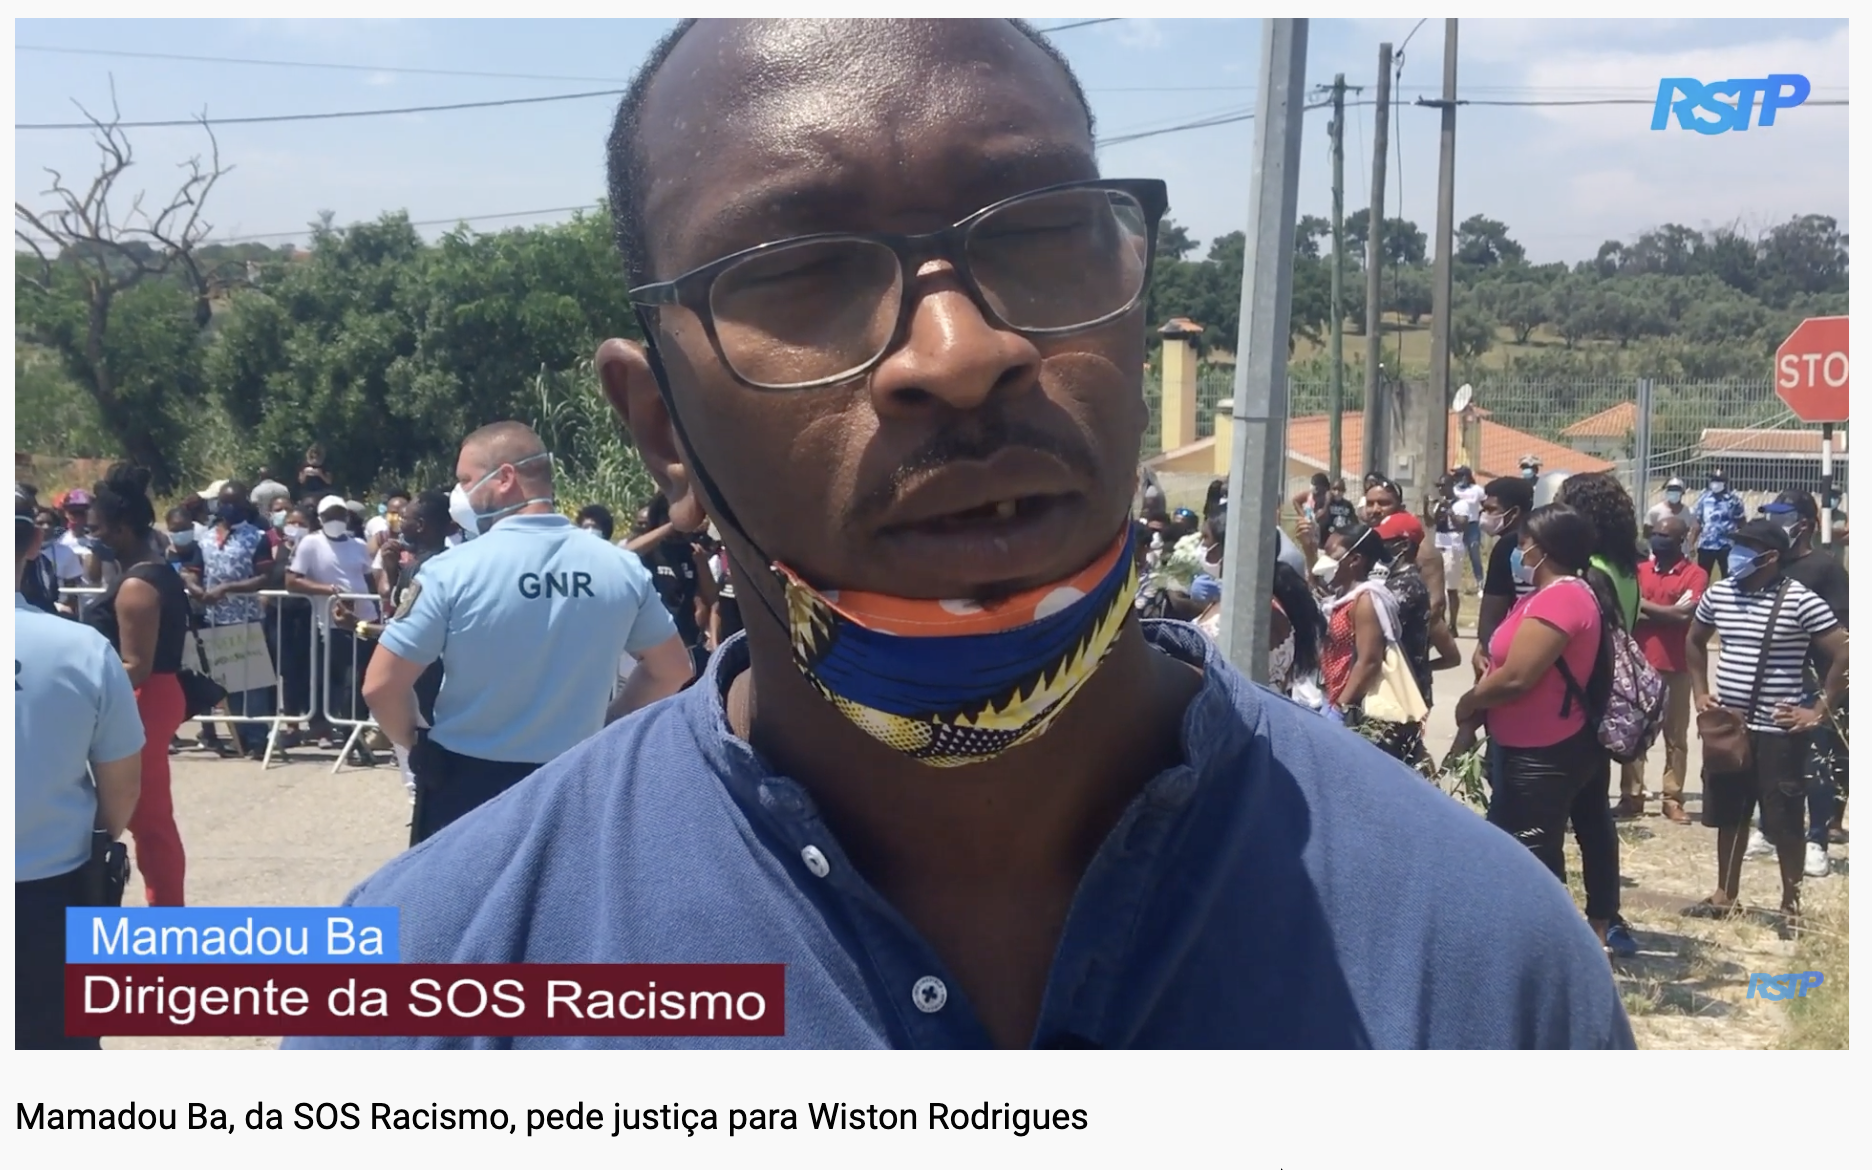 Mamadou Ba, da SOS Racismo - captura de ecrã YouTube, feita pelo autor